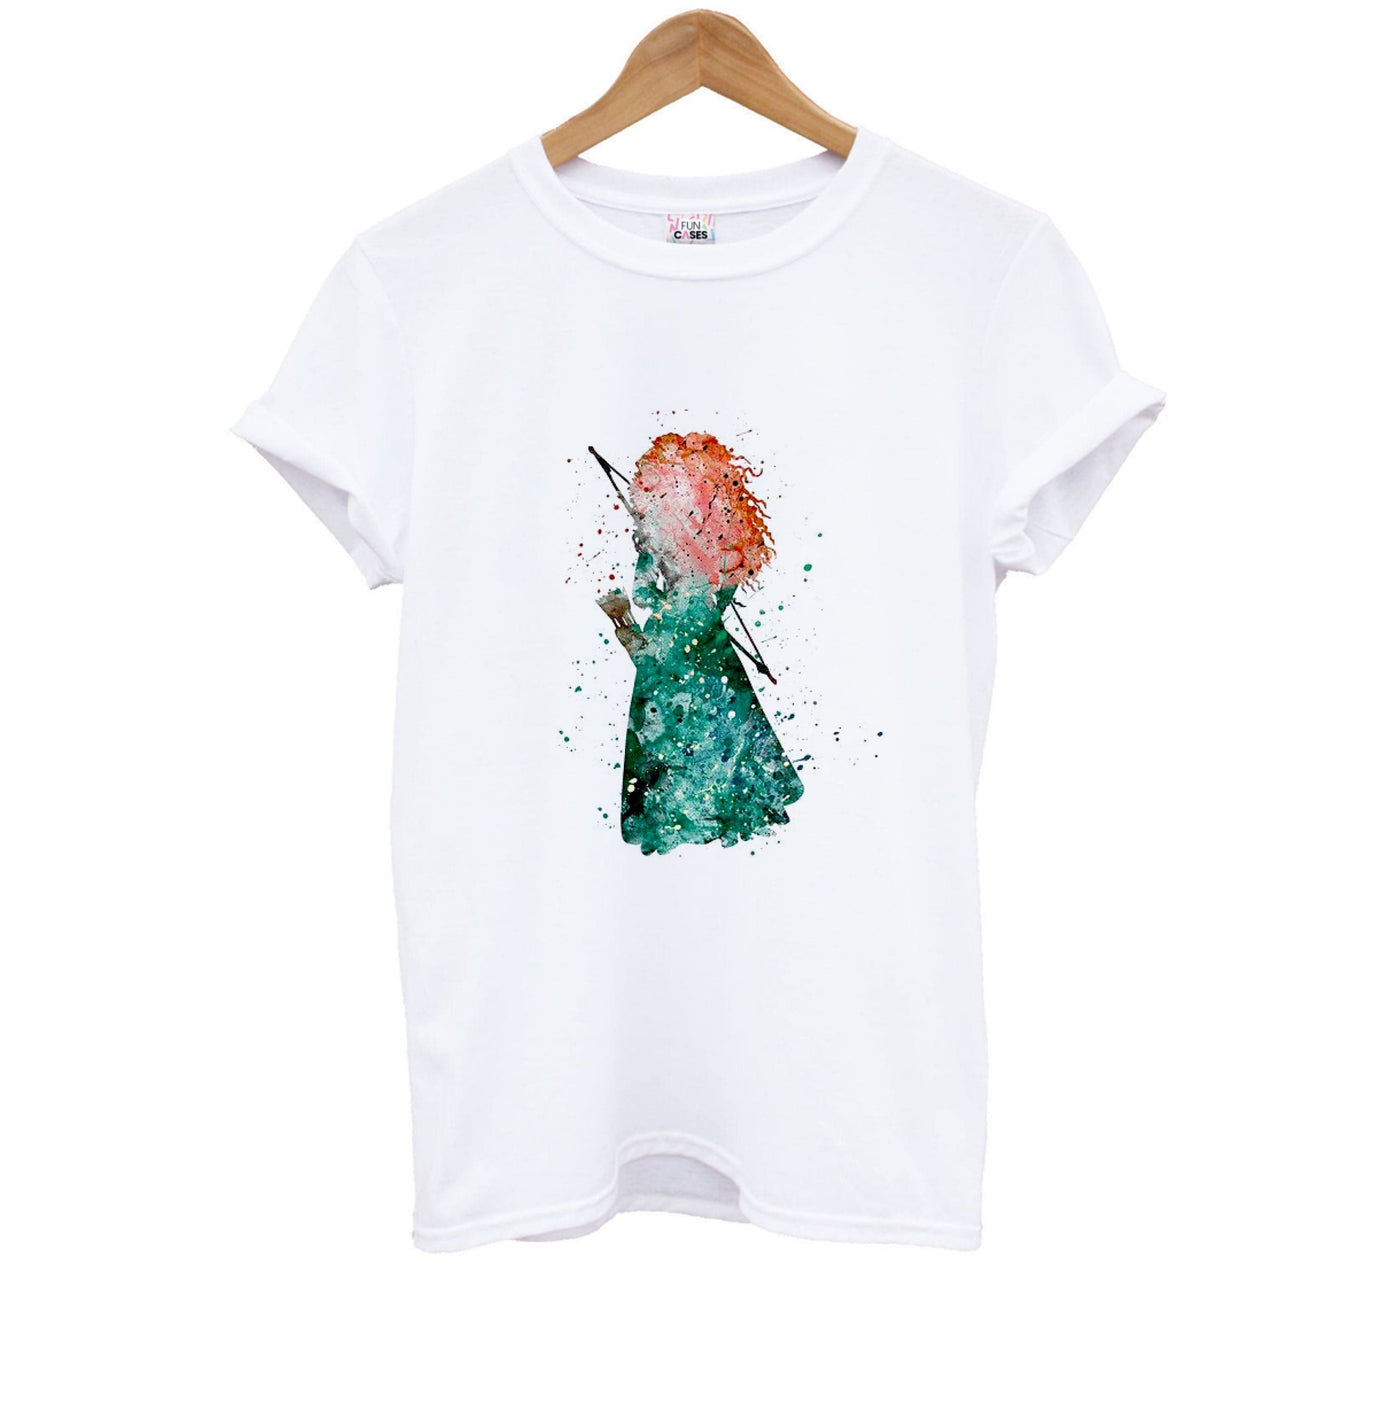 Watercolour Princess Merida Brave Disney Kids T-Shirt